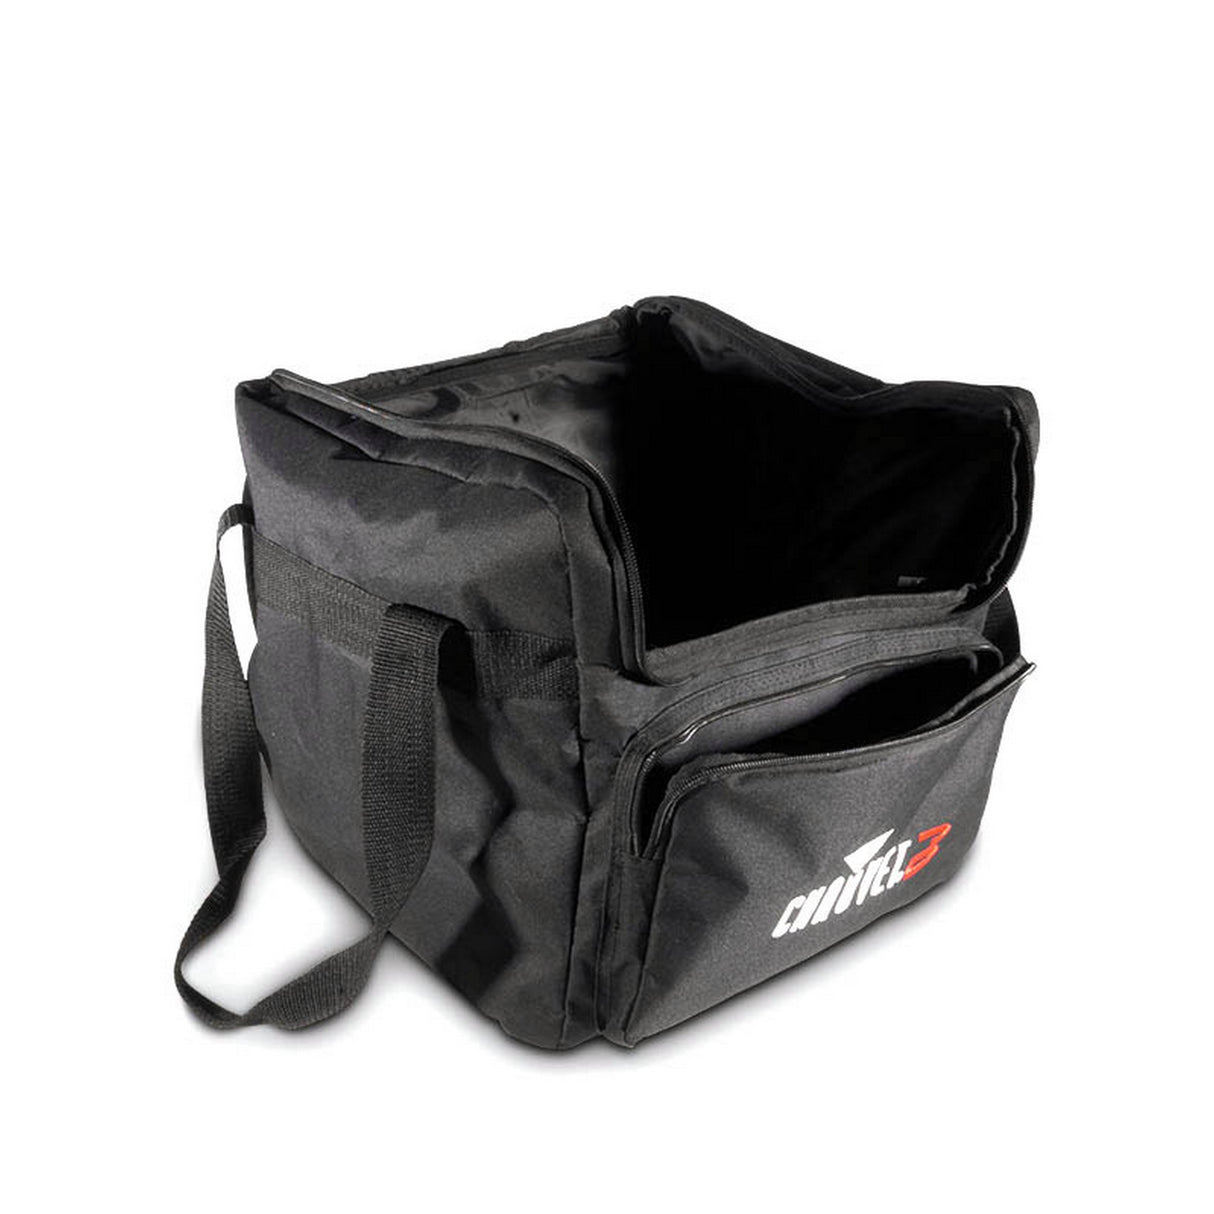 Chauvet DJ CHS-40 Soft-Sided Transport Bag for Lighting Fixtures